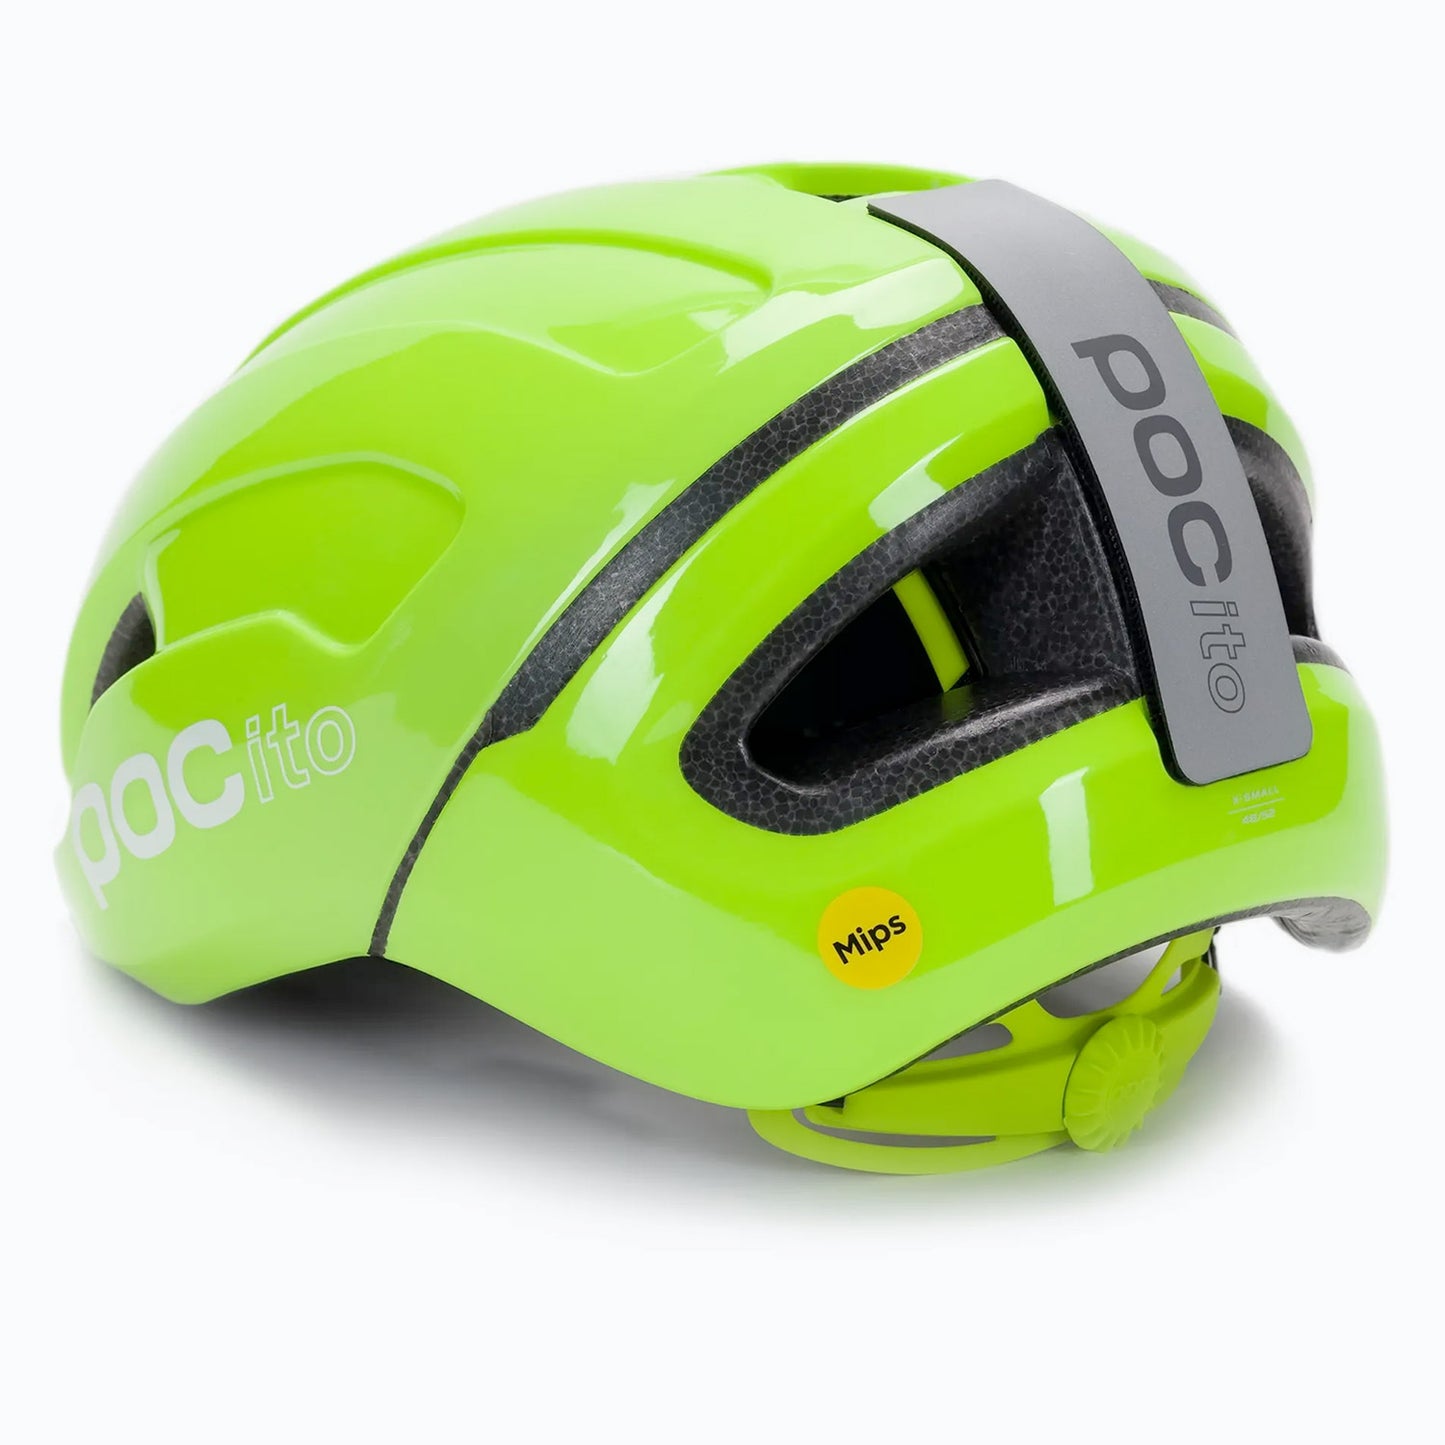 Poc Pocito Omne Children's Helmet with MIPS Fluorescent Yellow/Green